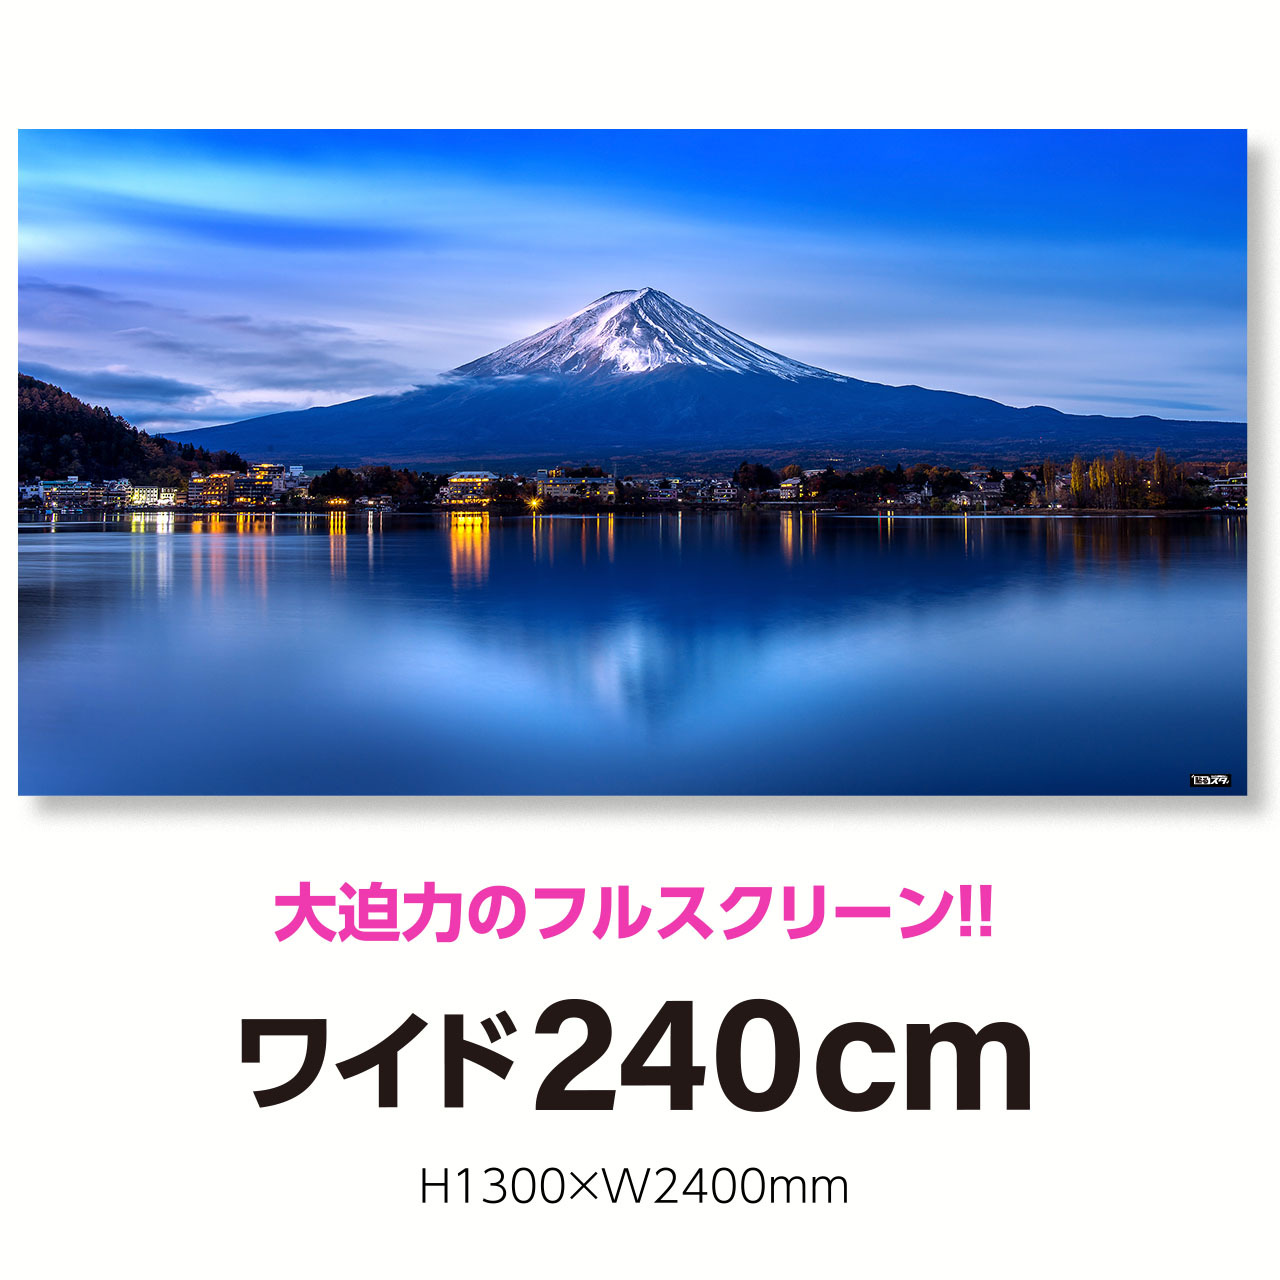 Nj 033l 超ワイド240cm H1300 W2400mm 自然 風景 日本の景色 富士の夜明け 静岡 はがせるシール付き 貼るだけでスタジオ気分 テレワーク 撮影用壁紙ポスター 貼るスタ